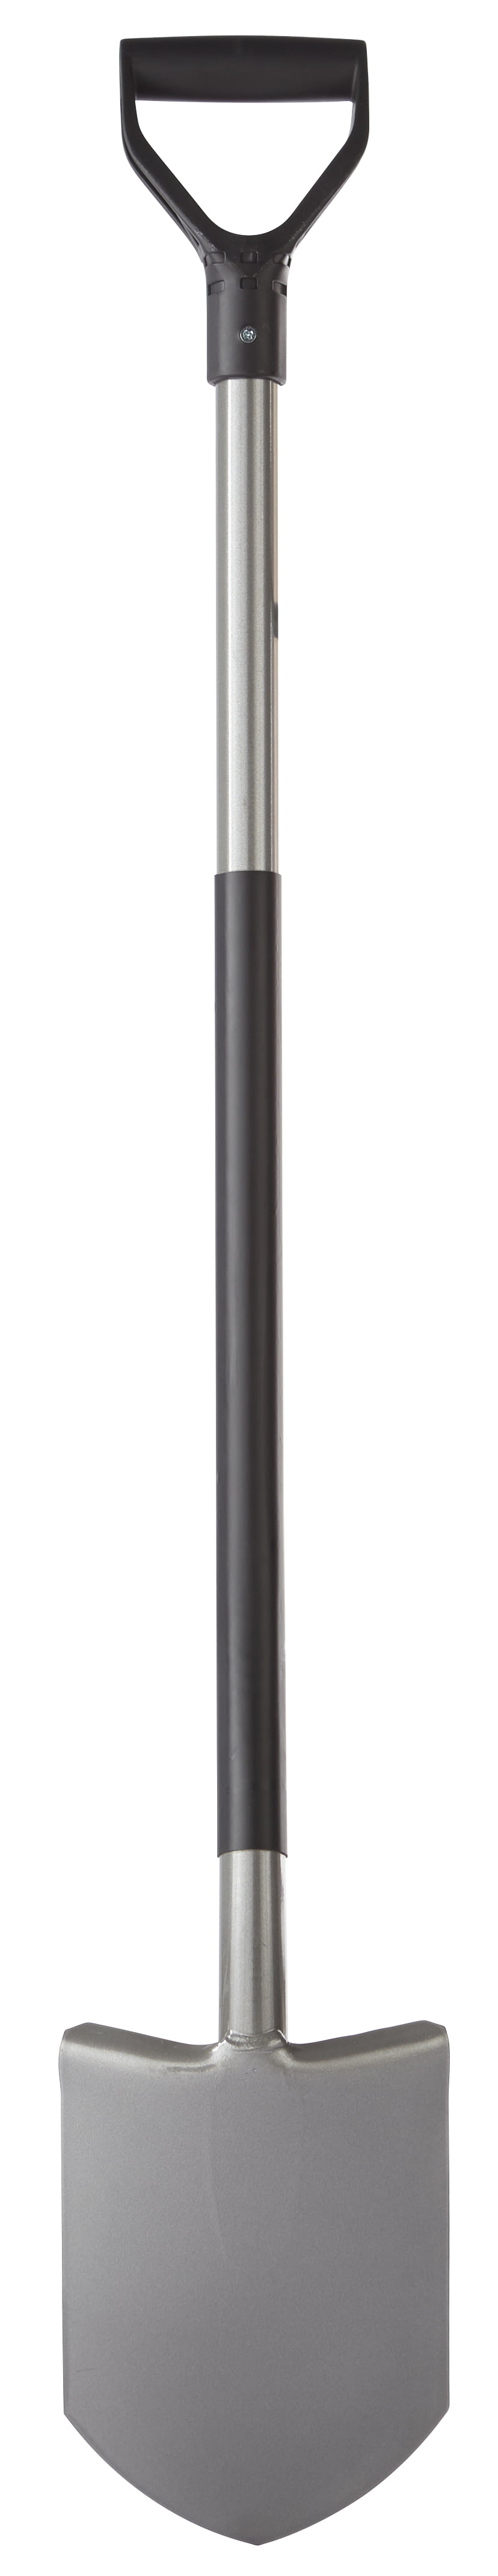 Fiskars Ergo D-handle Steel Shovel (49 Inch) - Walmart.com